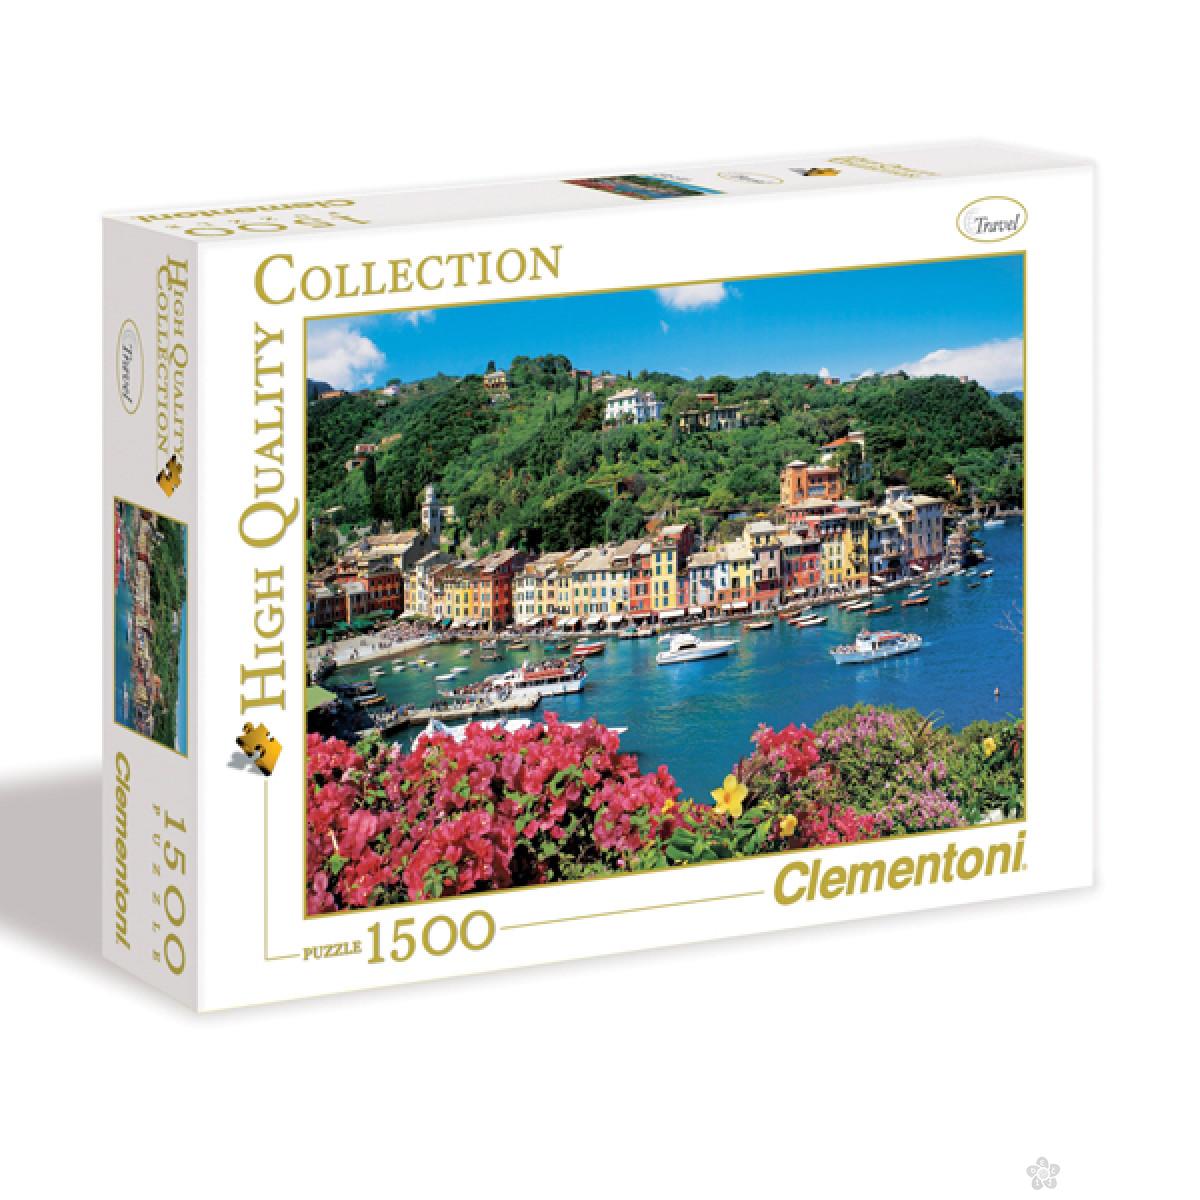 Puzzla Portofino 1500 delova Clementoni, 31986 